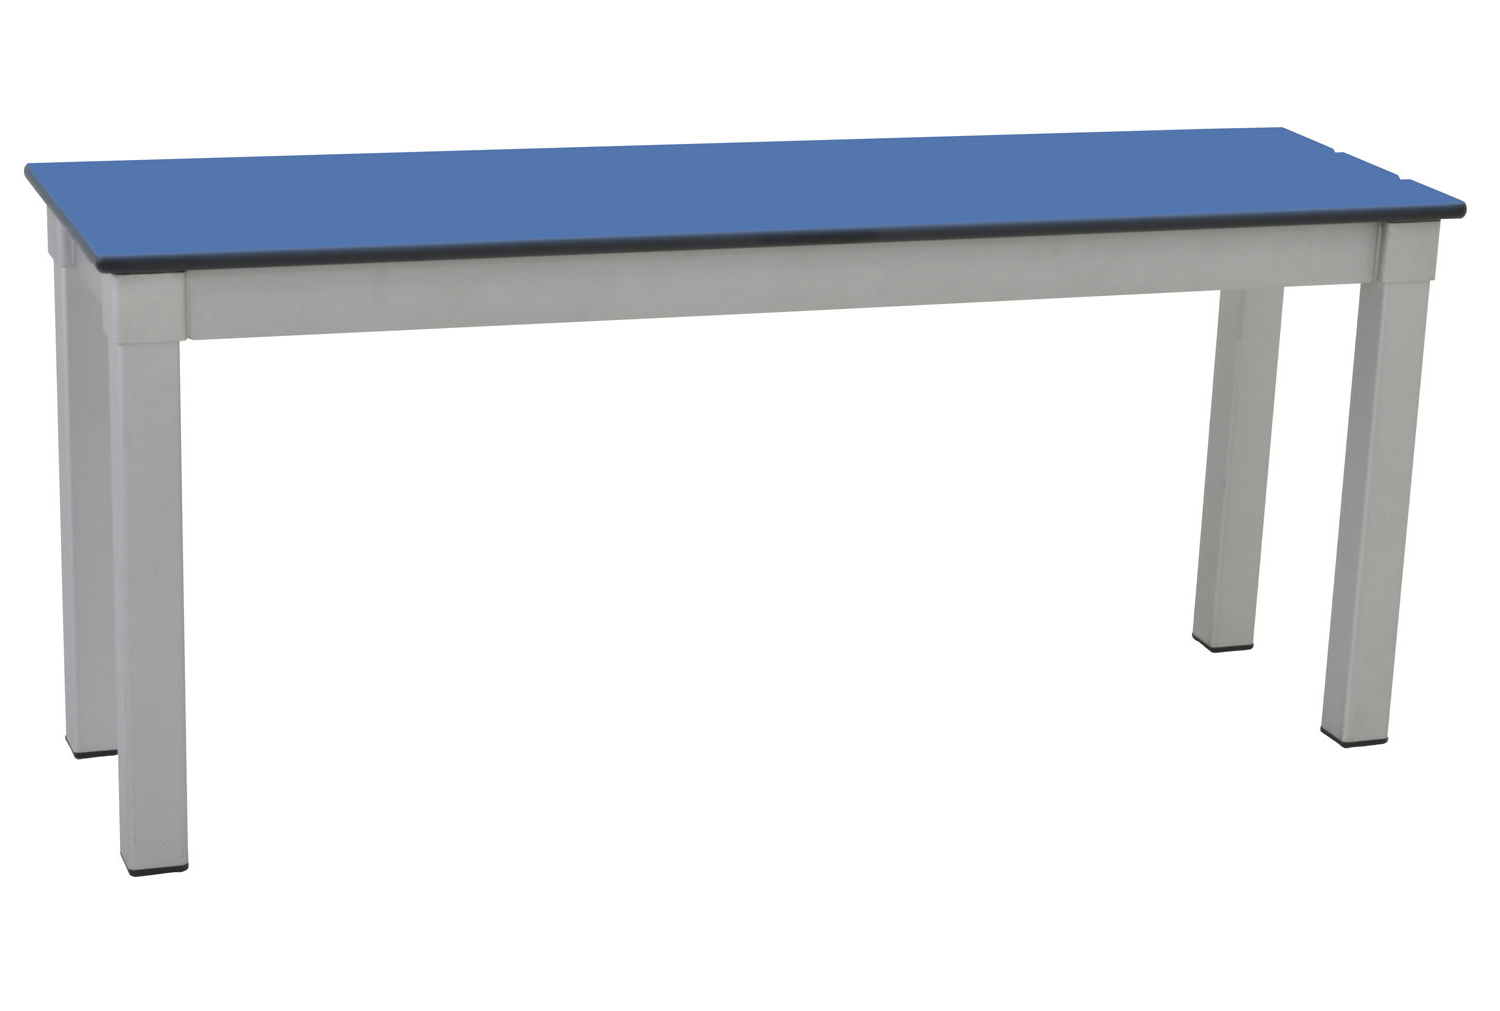 Gopak Enviro Compact Outdoor Bench With Solid Top, 100wx30d (cm), Azure